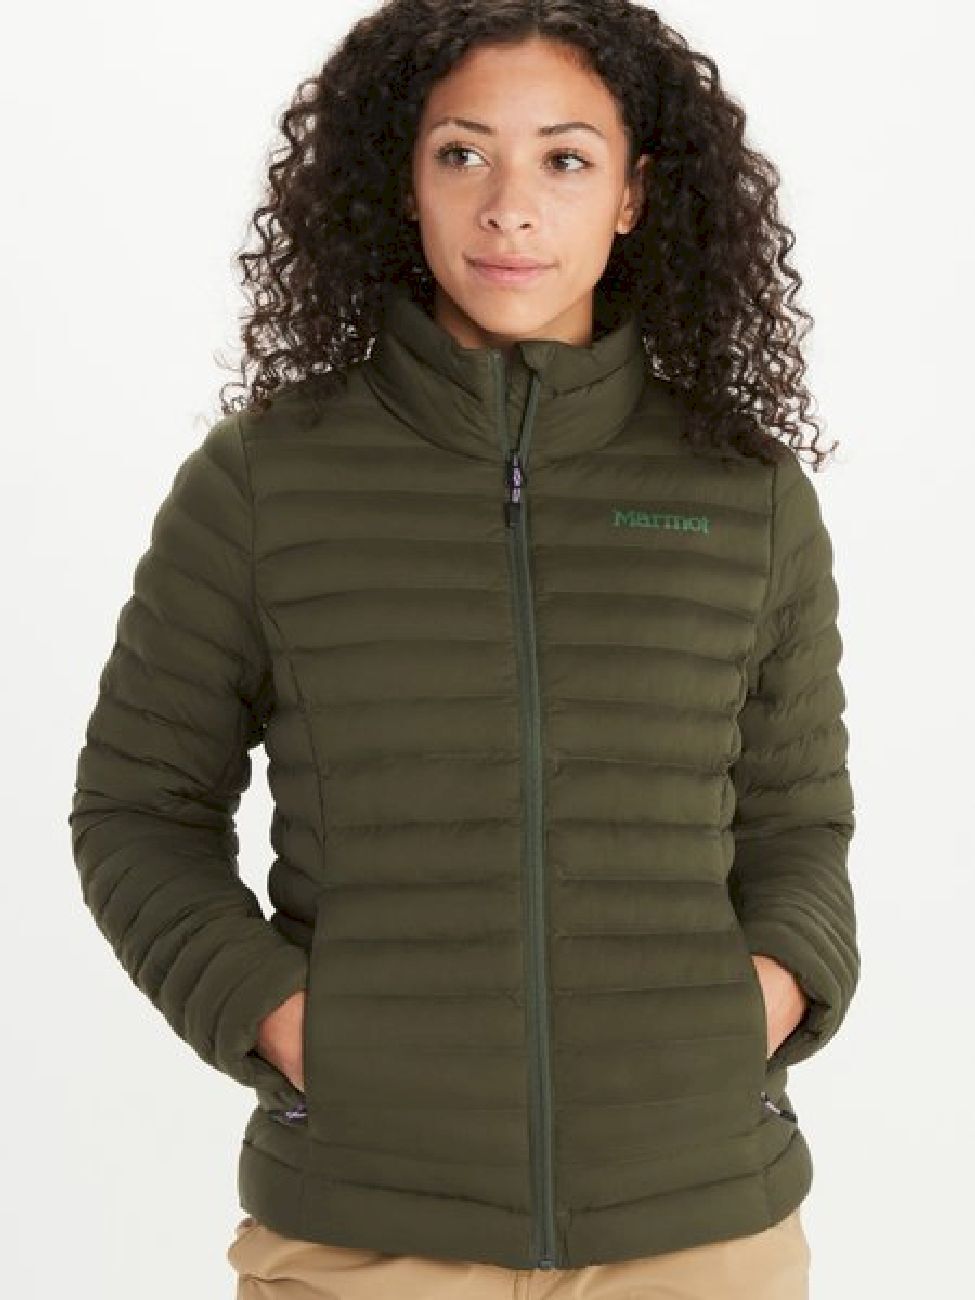 Marmot Echo Featherless Jacket - Synthetic jacket - Women's